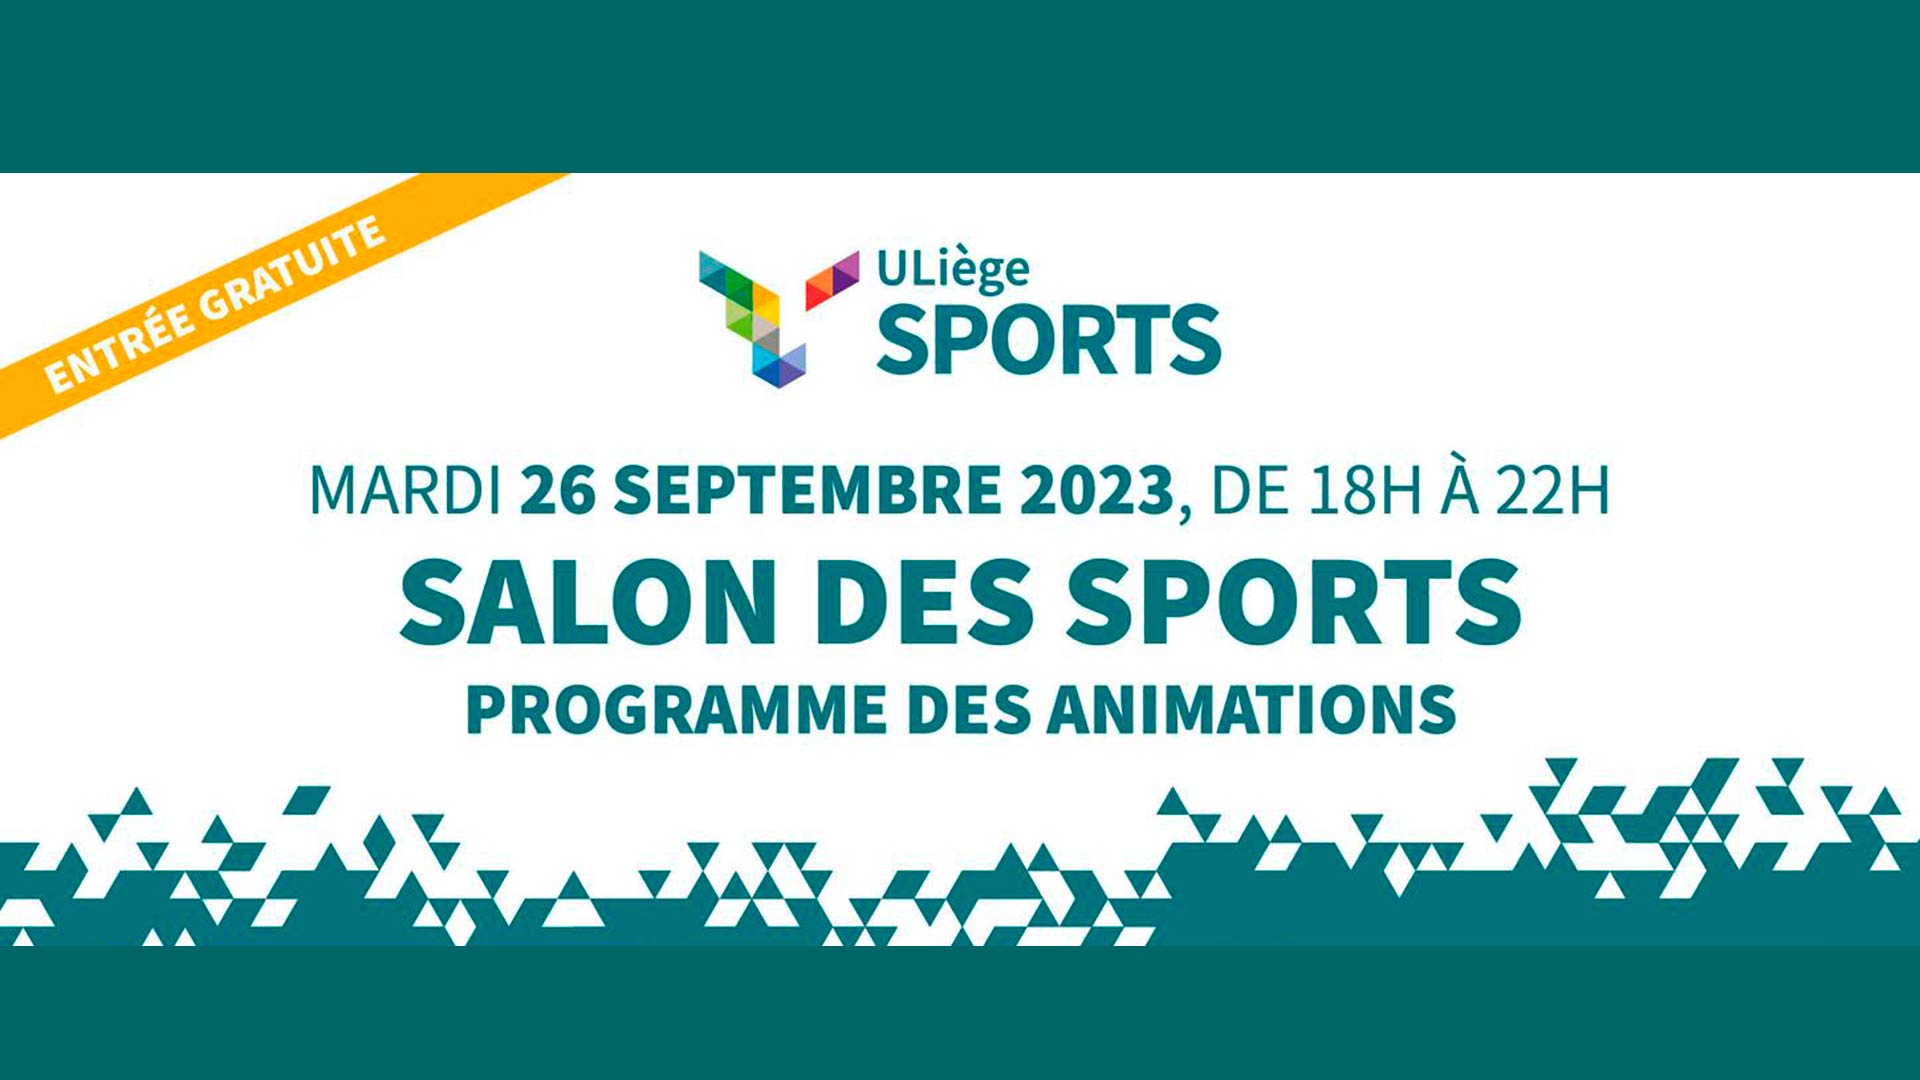 Ulg Sports image promotionnelle.